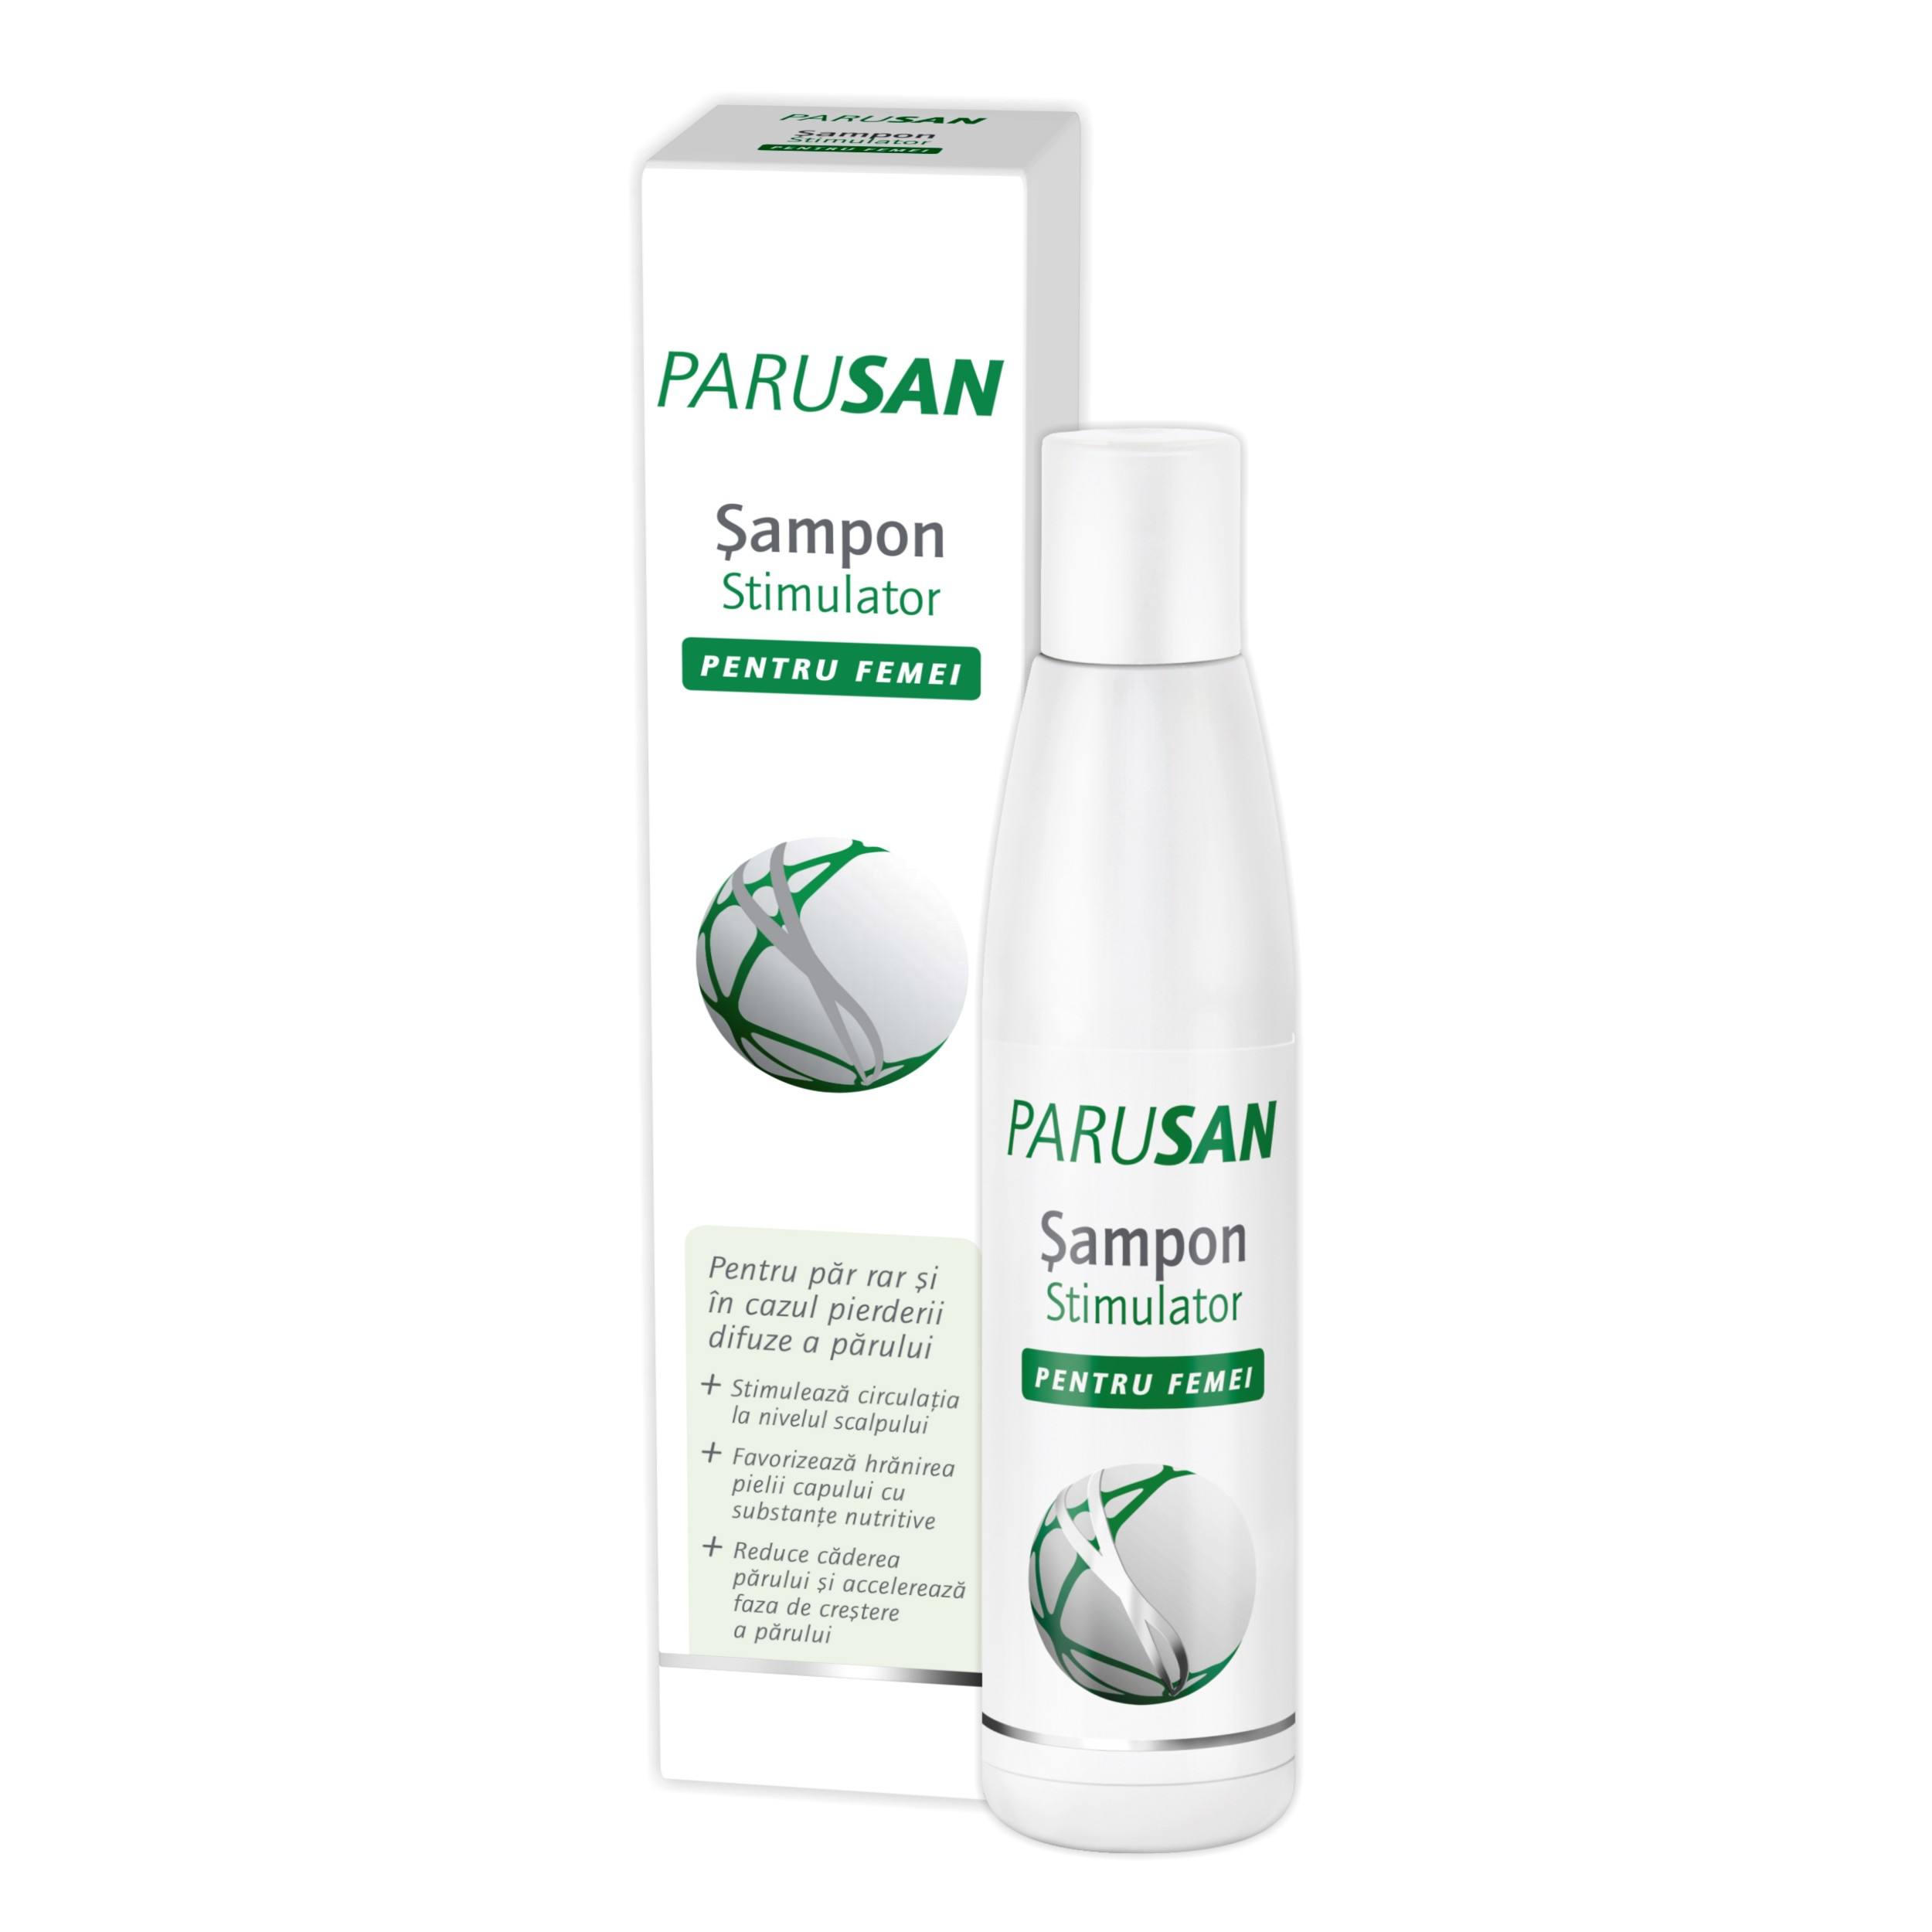 ParuSan sampon stimulator pentru femei, 200 ml 200% imagine teramed.ro